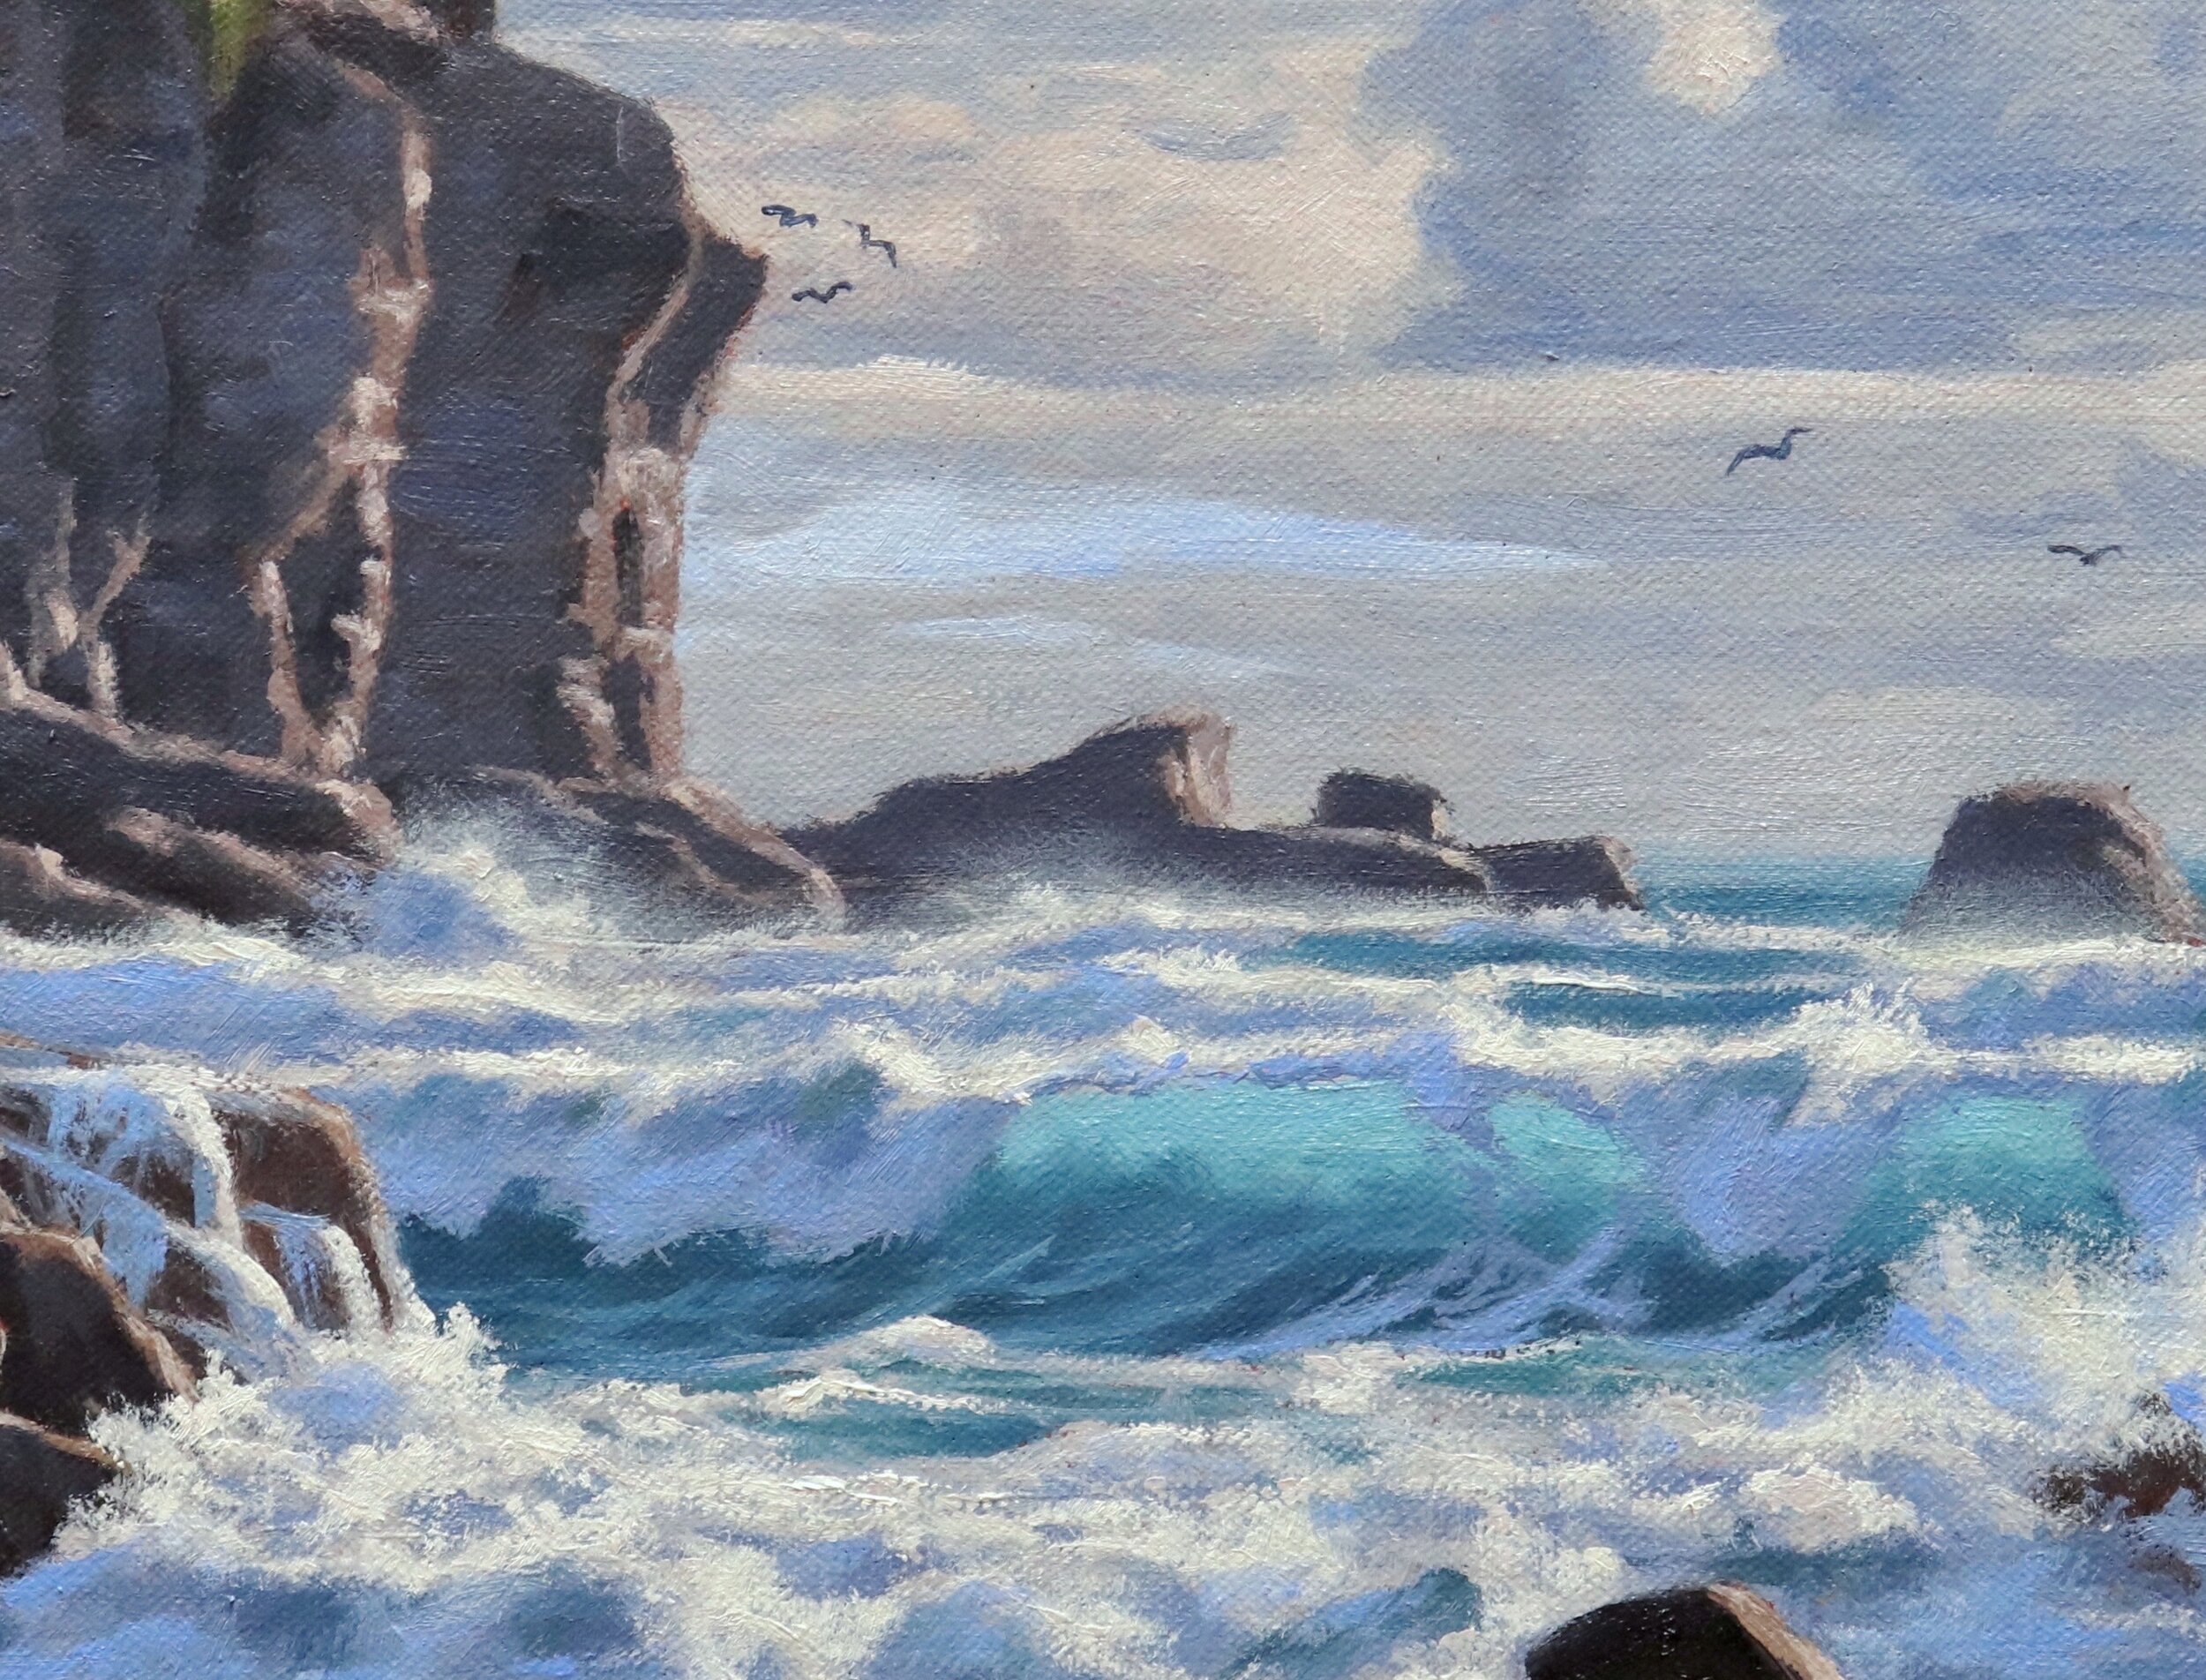 Breaking Waves - Piha - Samuel Earp - oil painting copy 4 - close up.jpeg